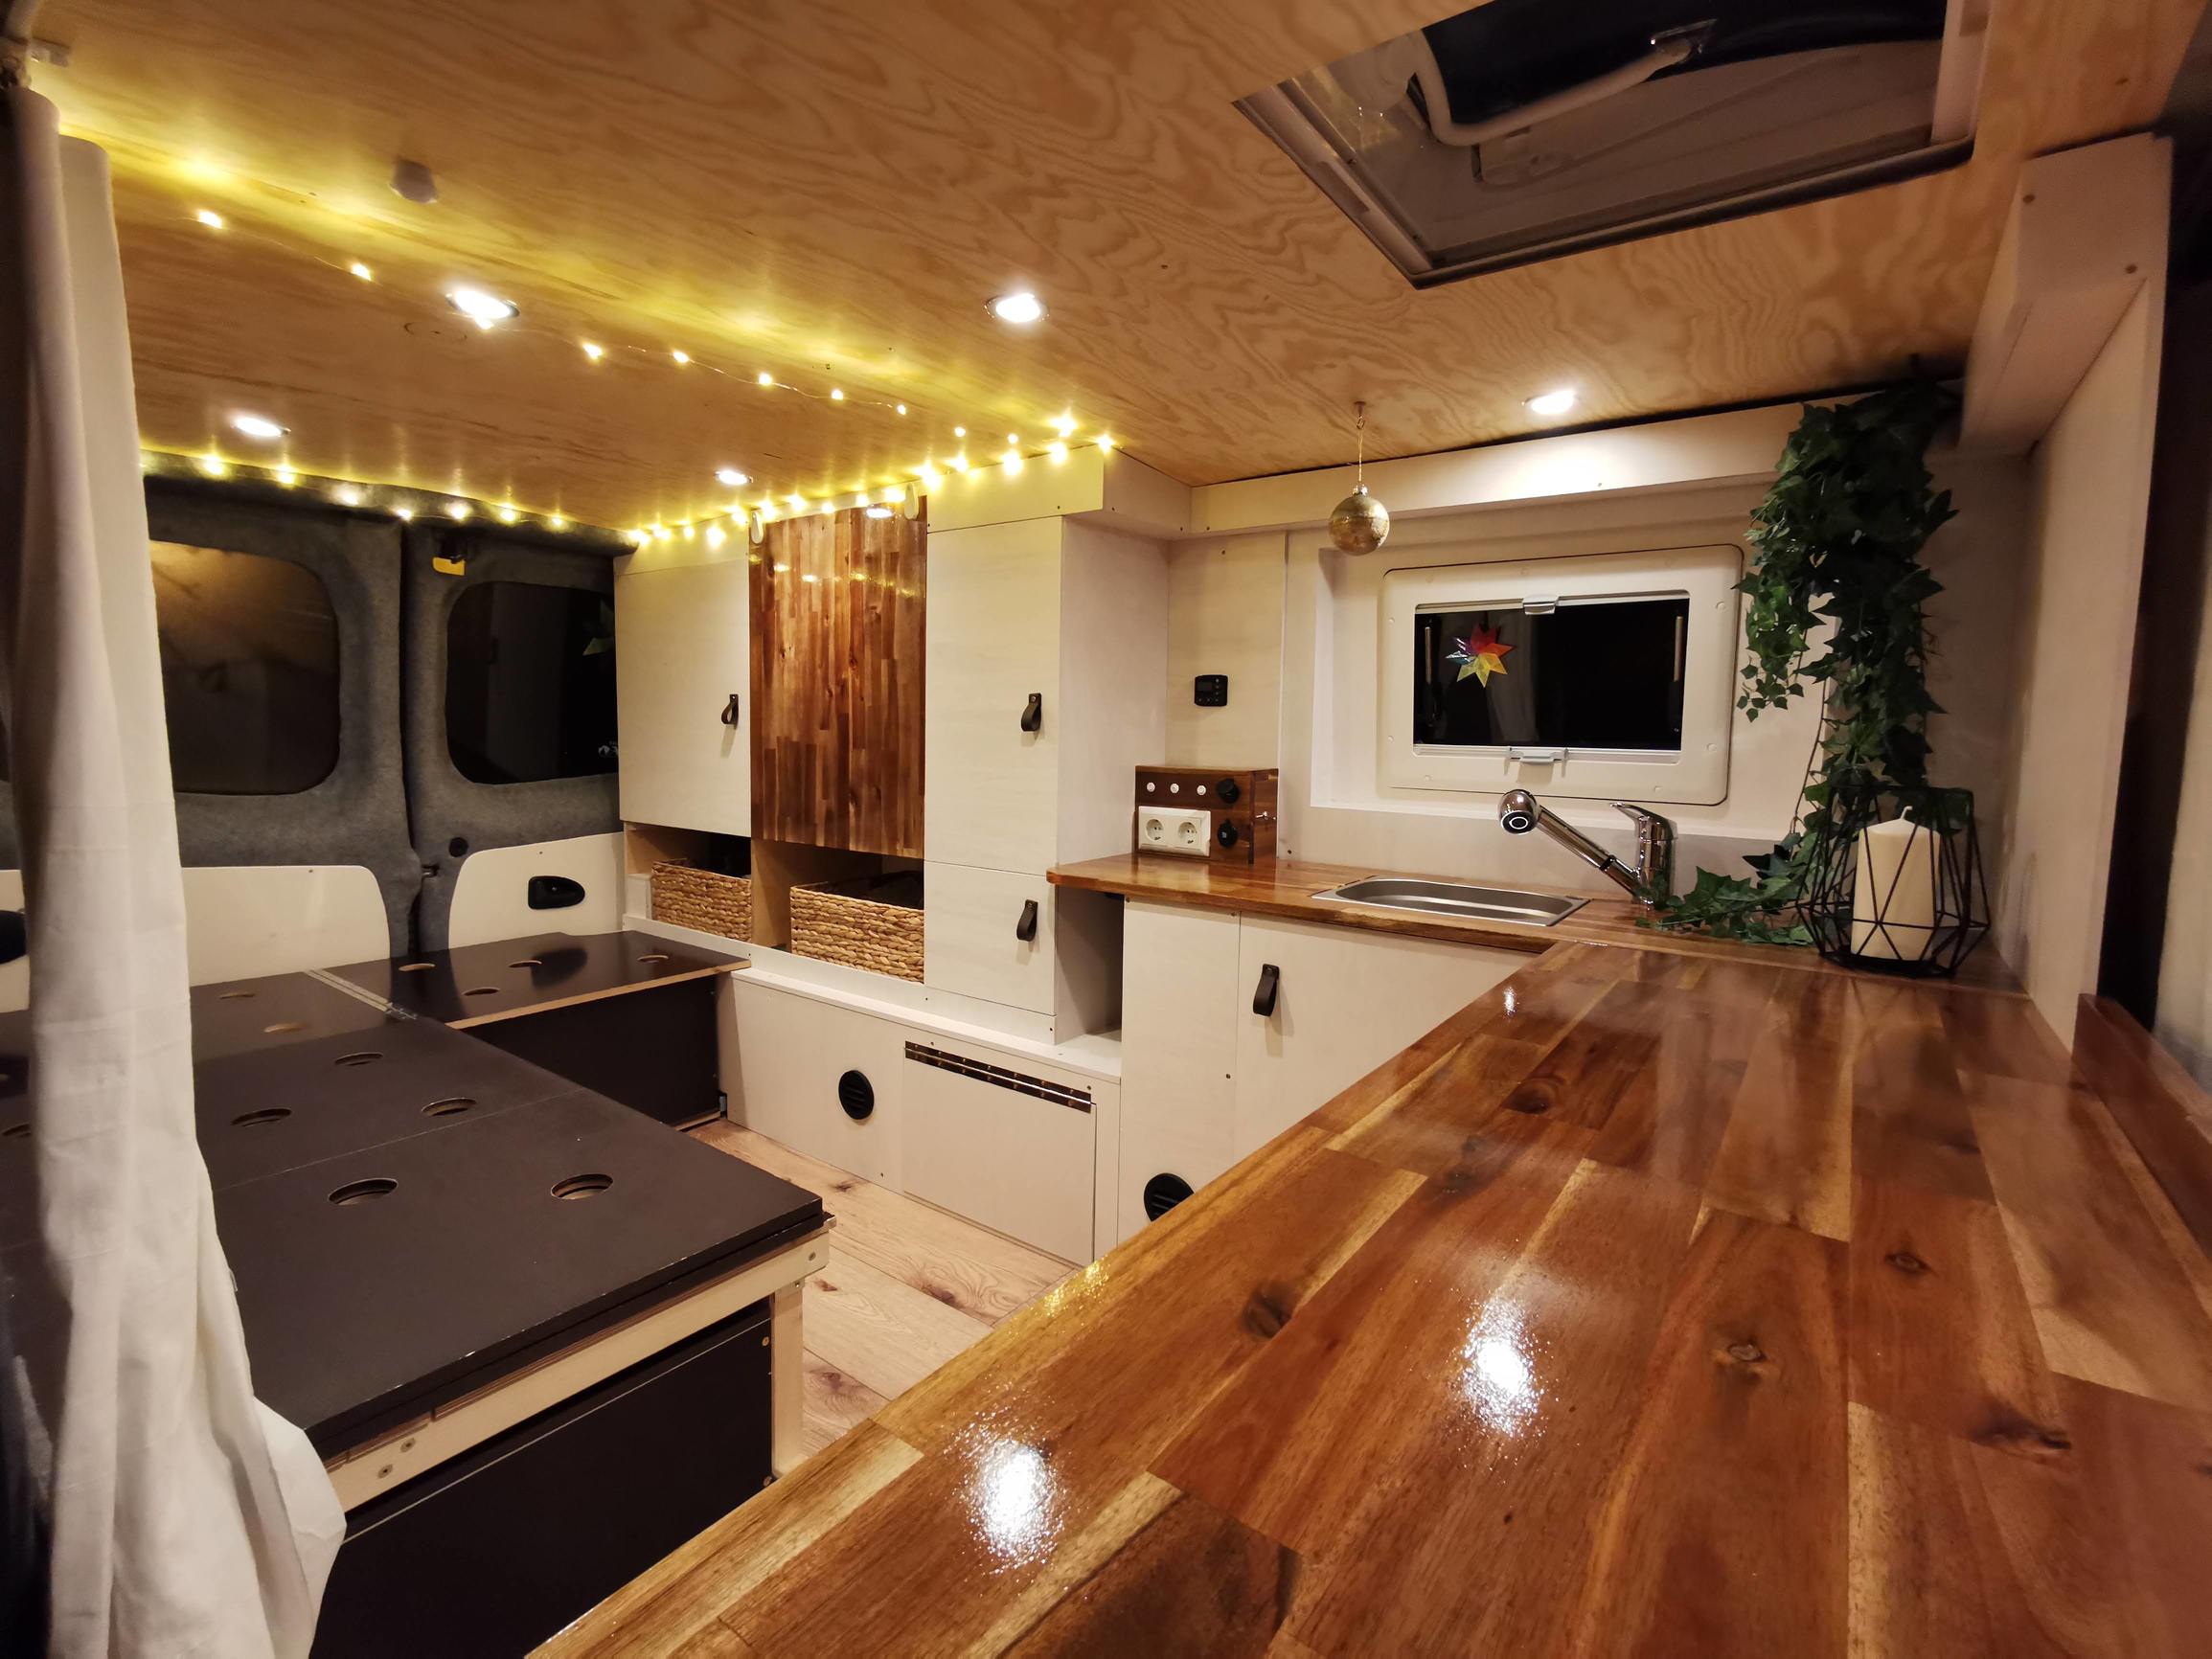 Vanlife: The 10 coolest camper vans with DIY conversions